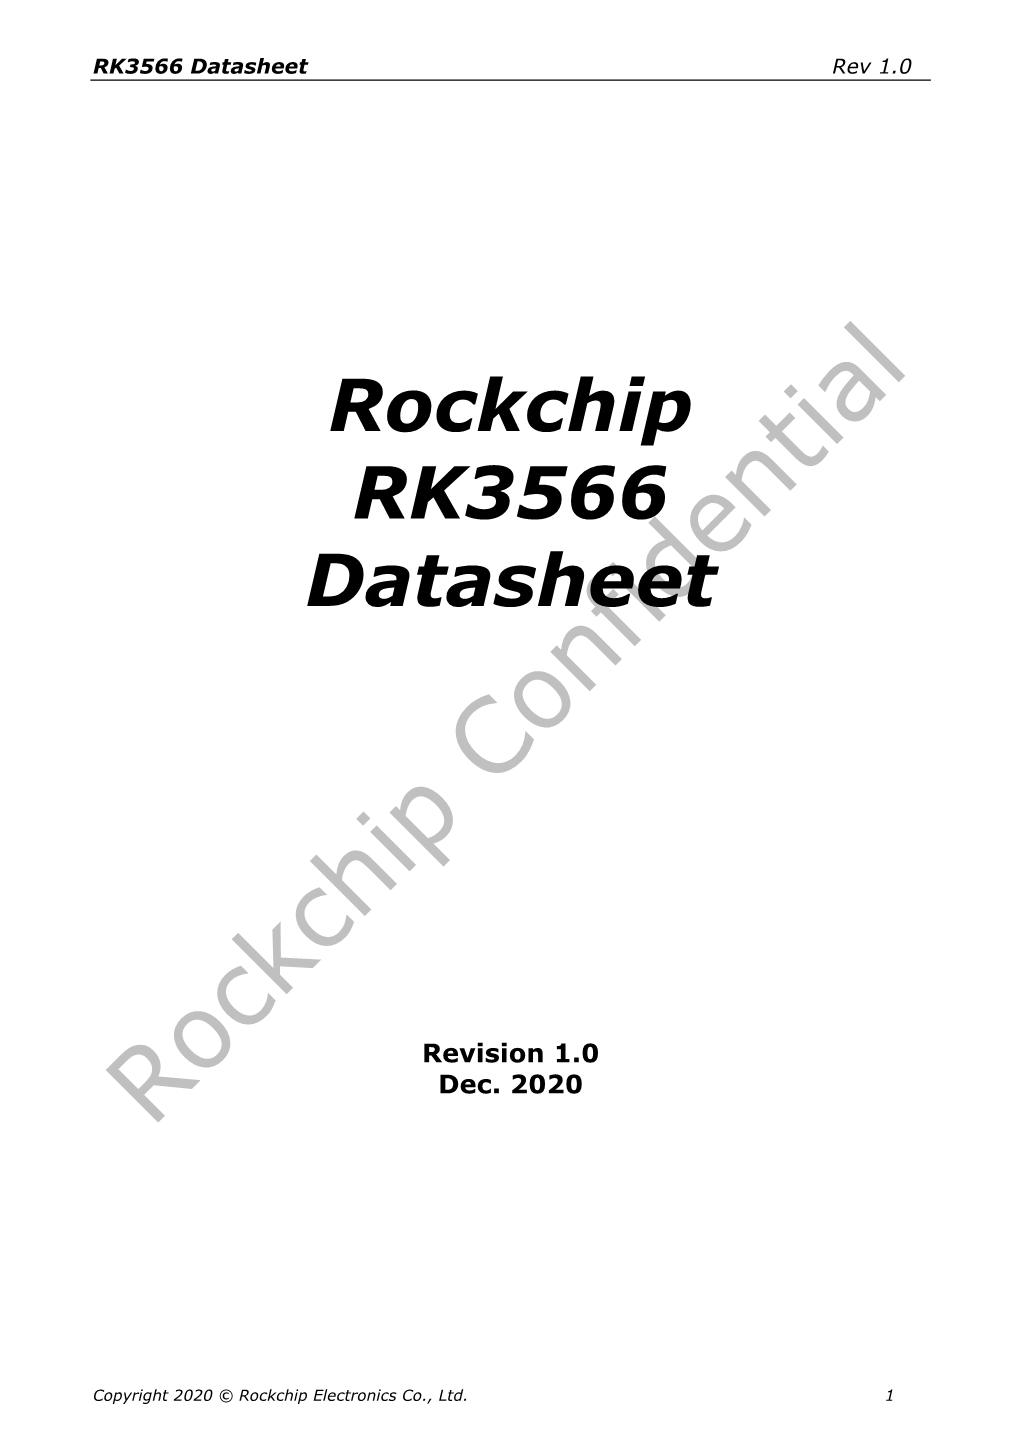 Rockchip RK3566 Datasheet